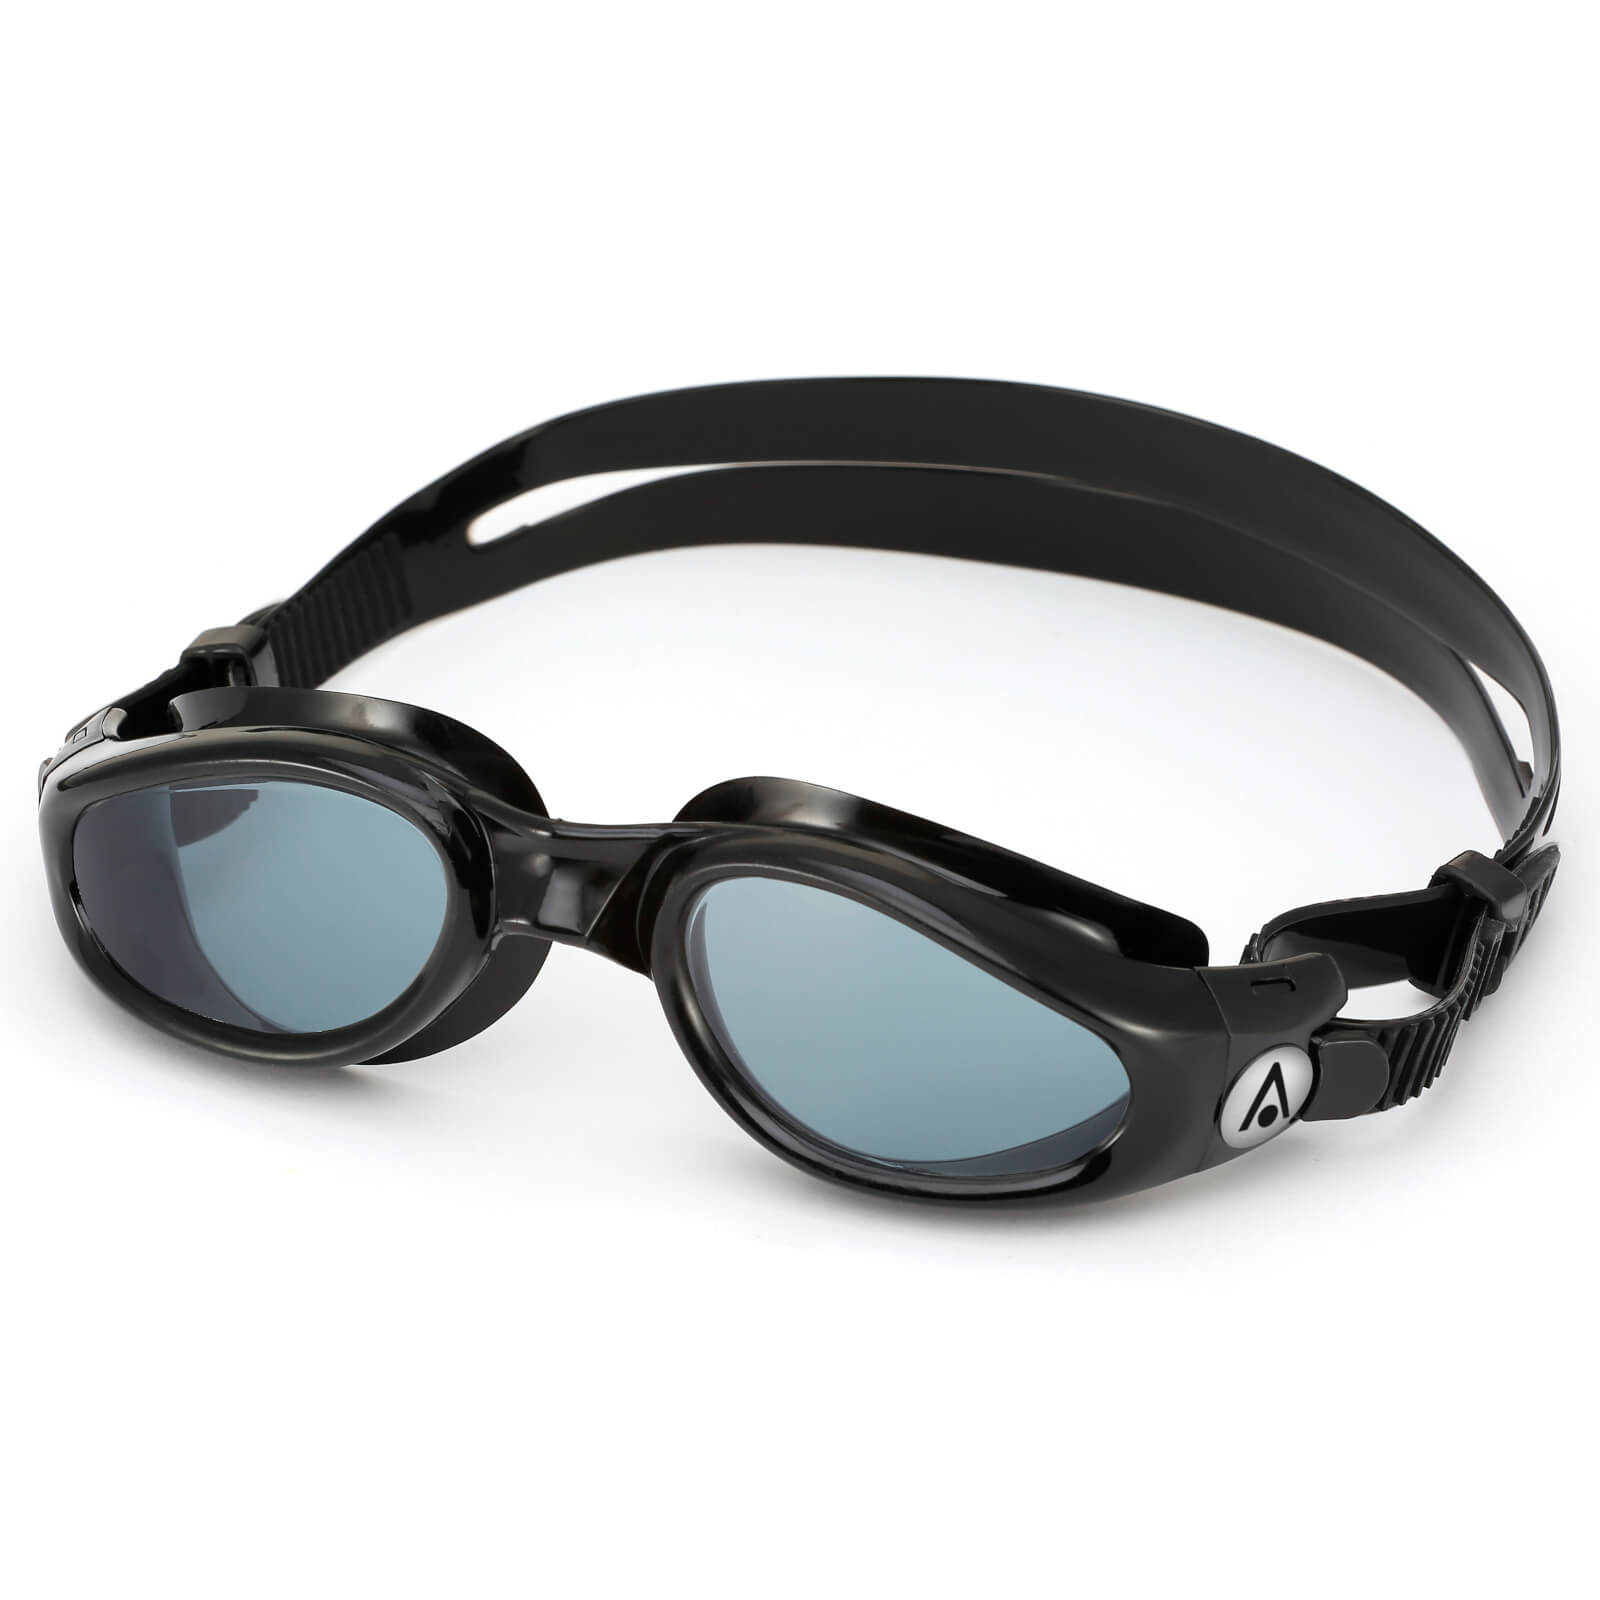 Men's Swimming Goggles Aqua Sphere Kaiman Adult Fitness Pool Black - Smoke